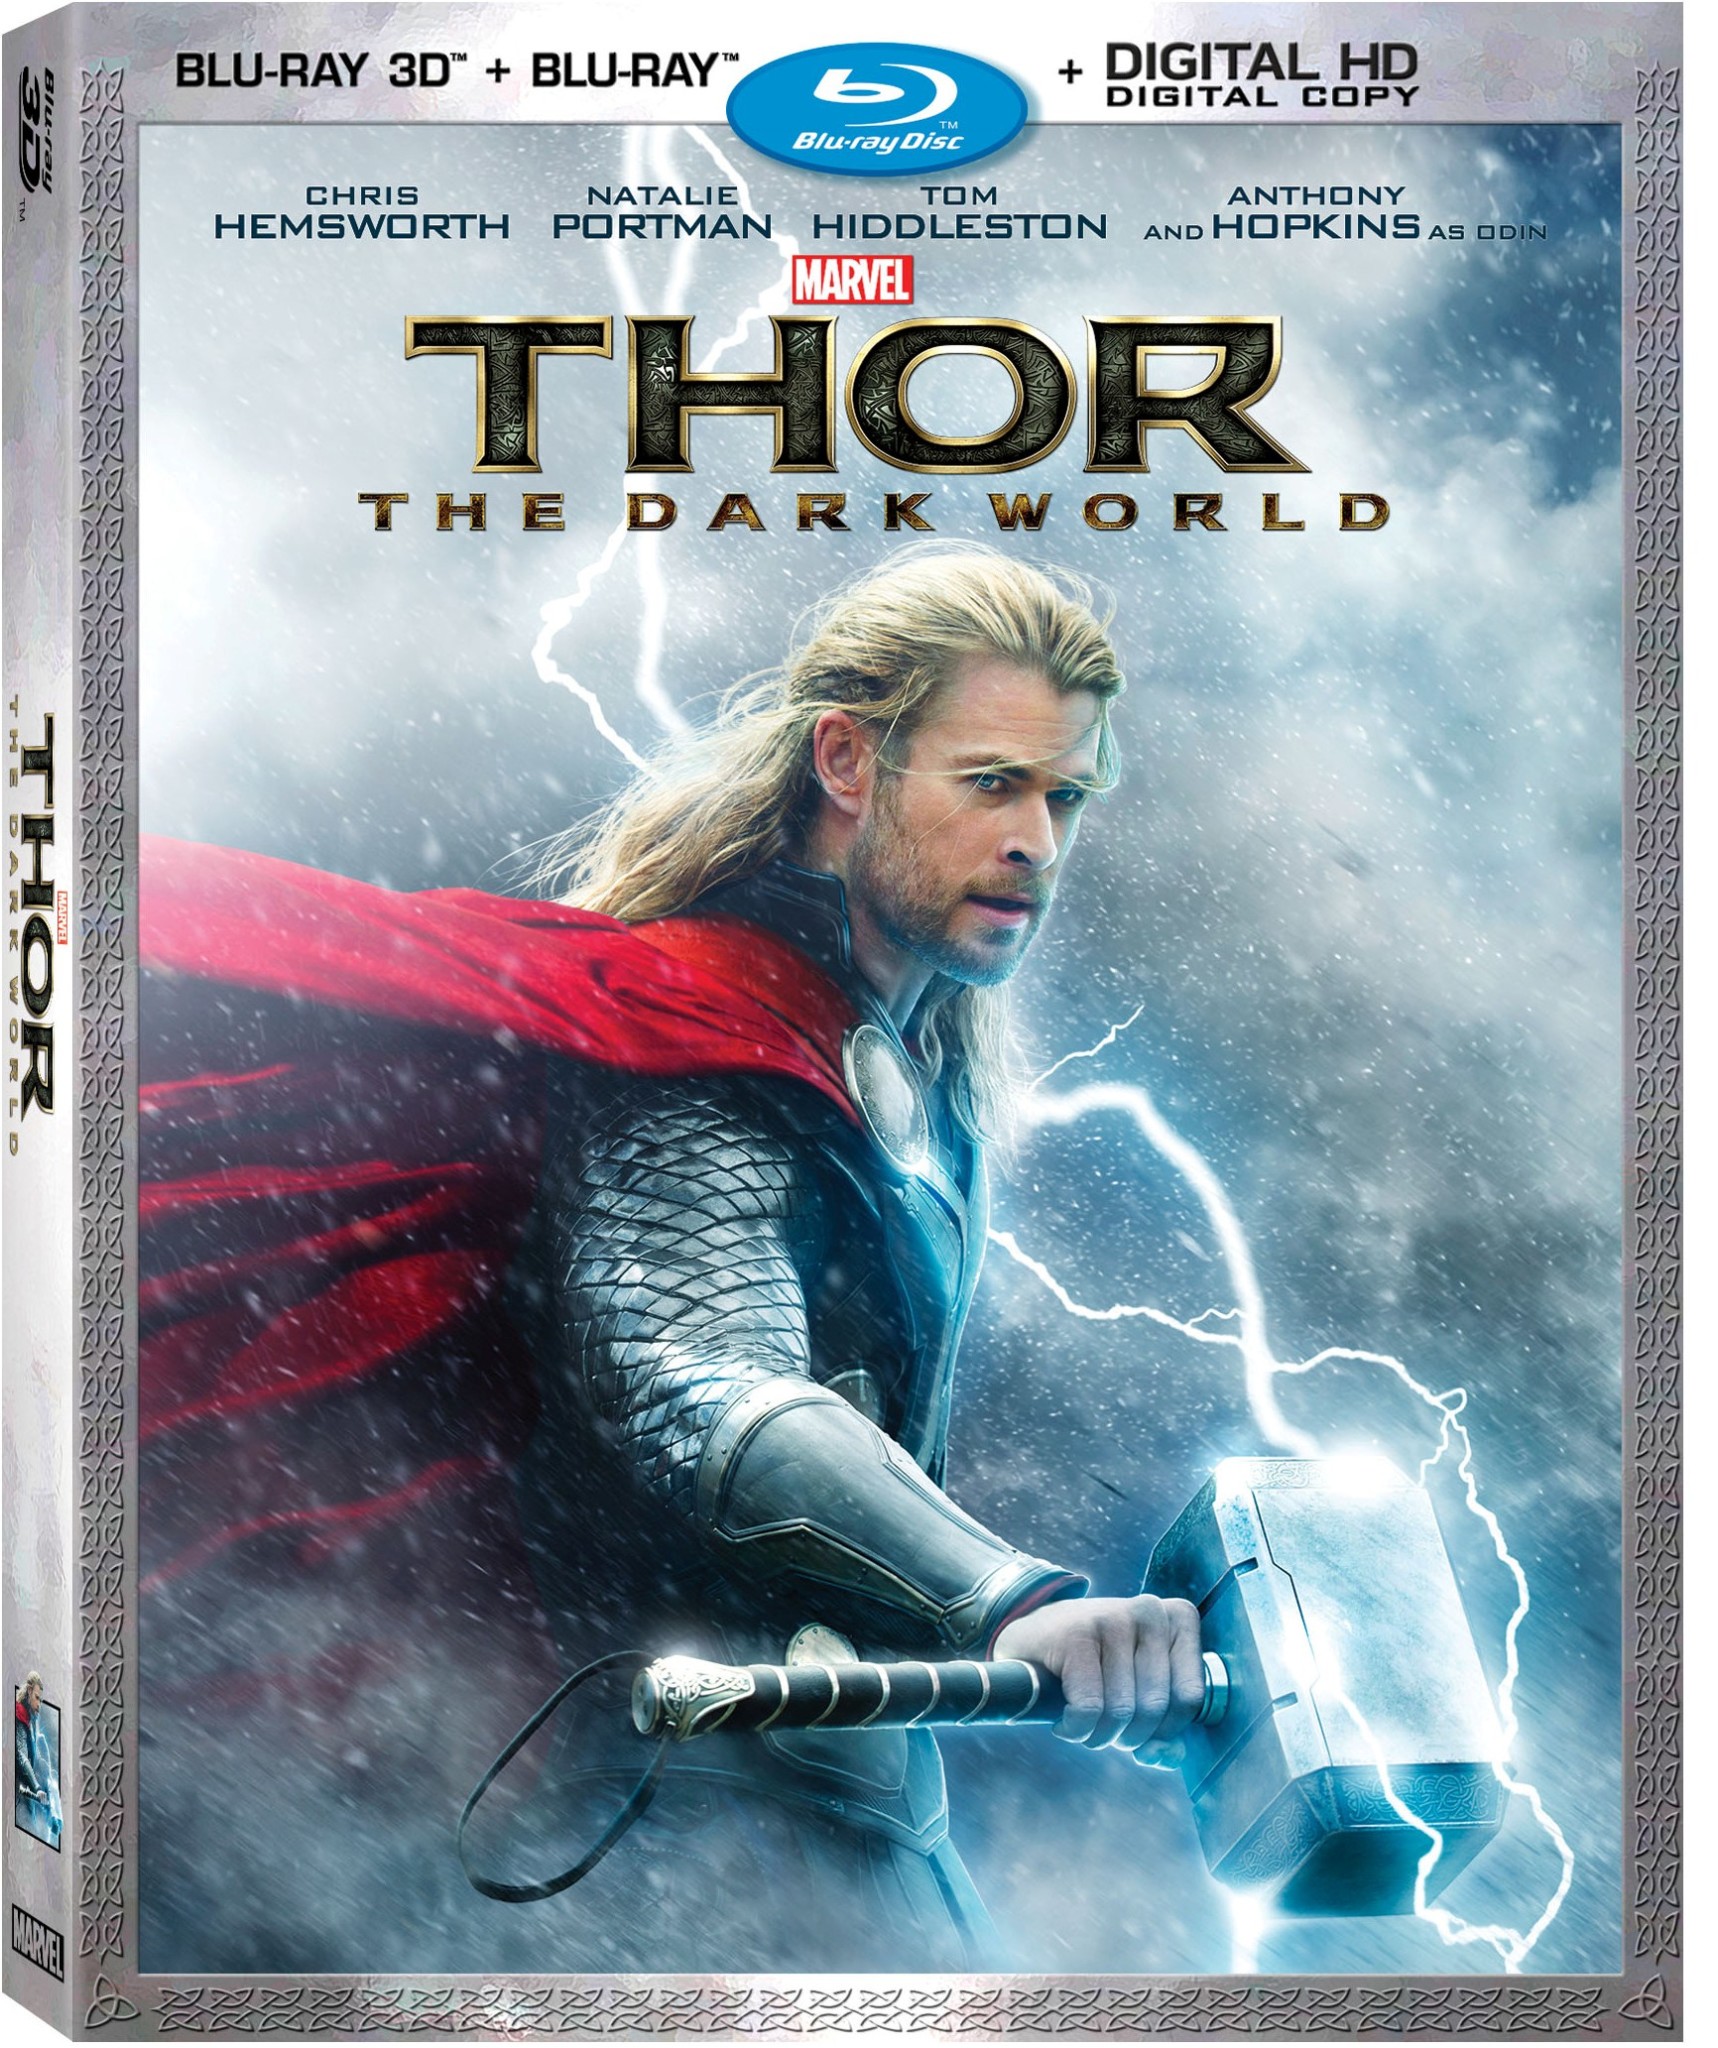 ‘Thor: The Dark World’ Comes to Blu-ray February 25, 2014